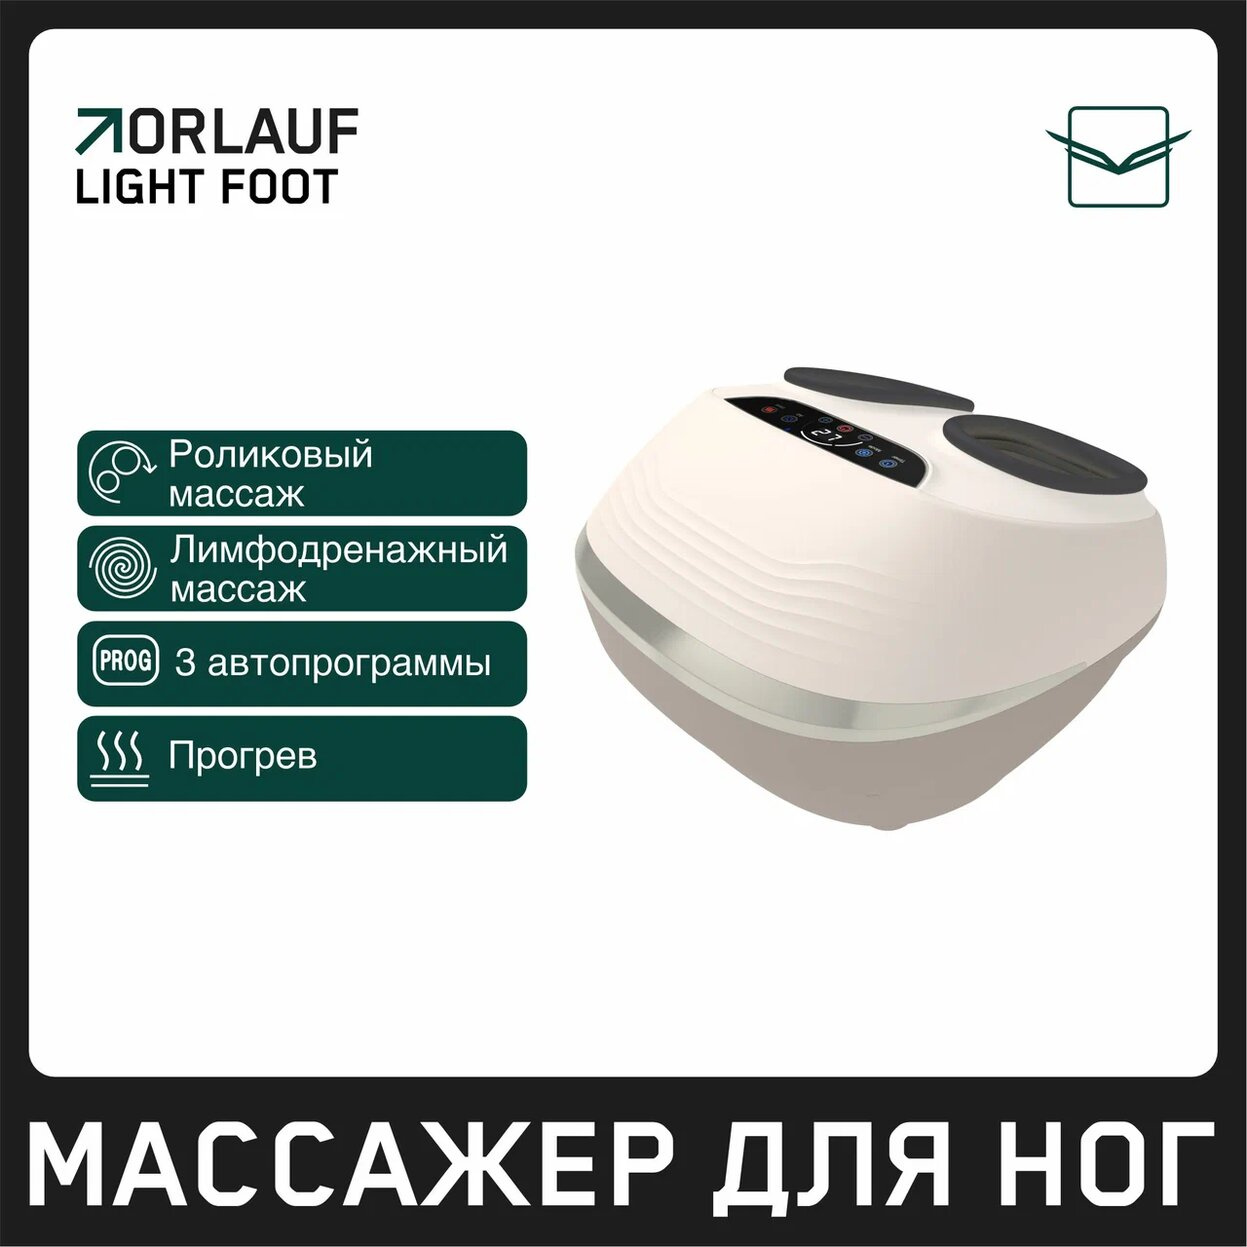 Orlauf Light Foot из каталога массажеров в Санкт-Петербурге по цене 18900 ₽